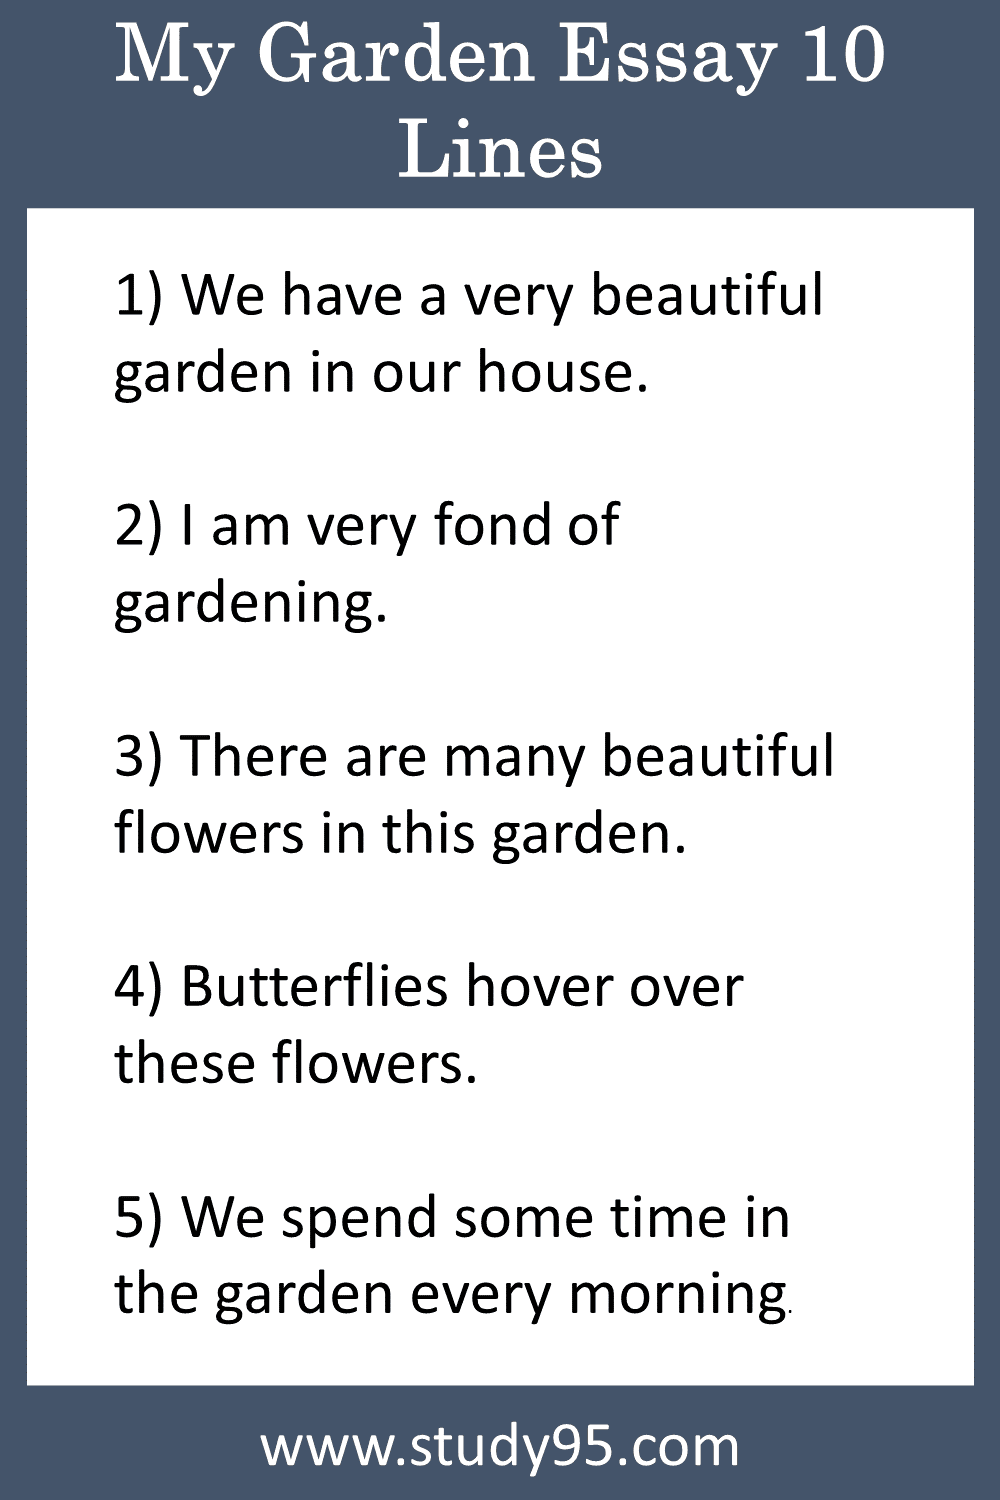 my garden essay 10 lines in malayalam